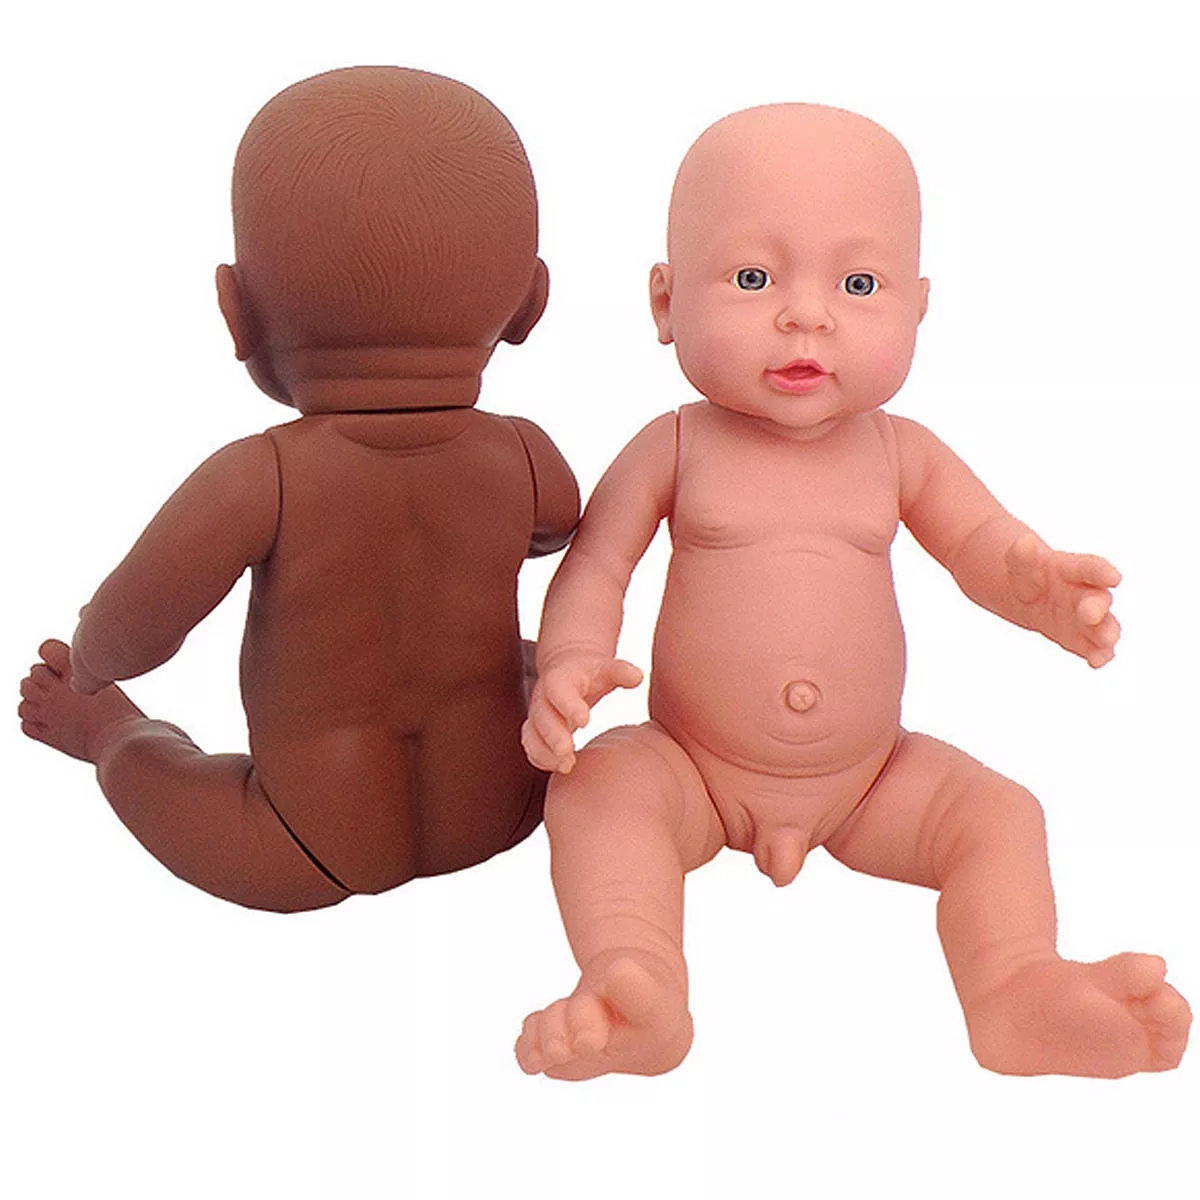 Unpainted-Blank-Doll-Mold-Full-Silicone-Vinyl-Reborn-Doll-Lifelike-Take-Care-Training-Figure-Baby-Do-1460193-1